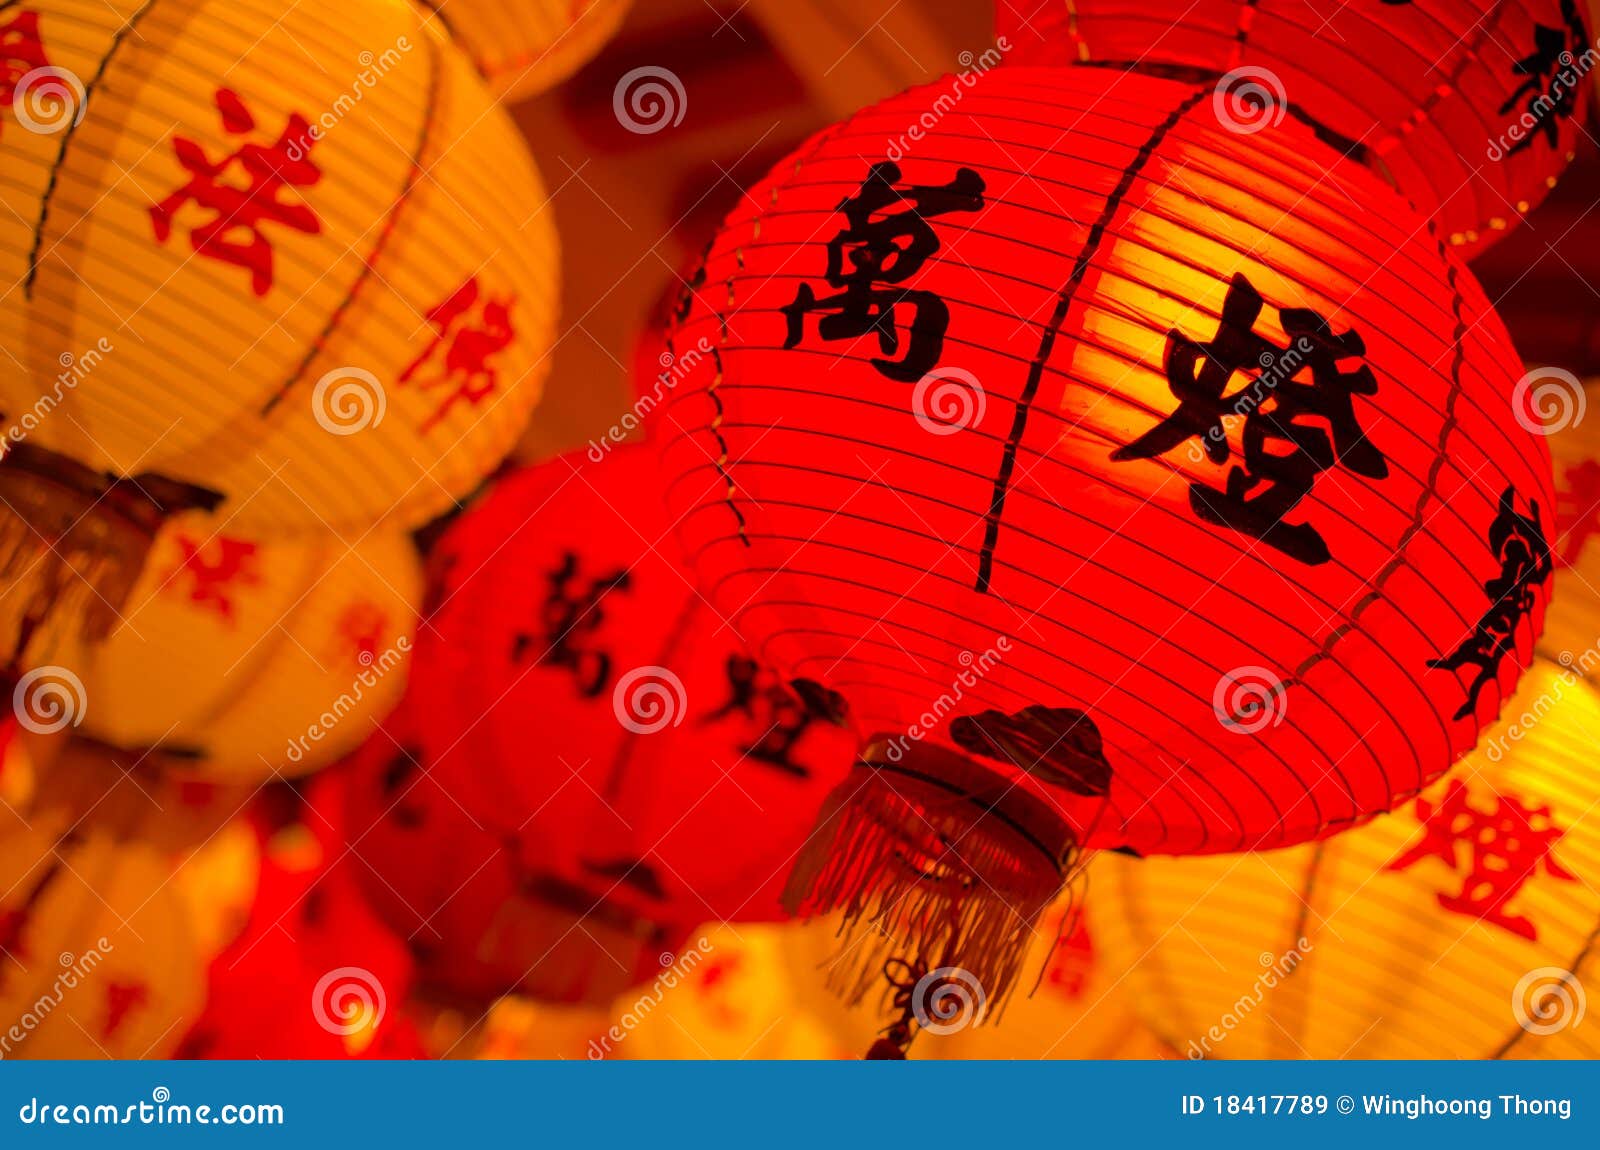 traditional chinese new year lantern